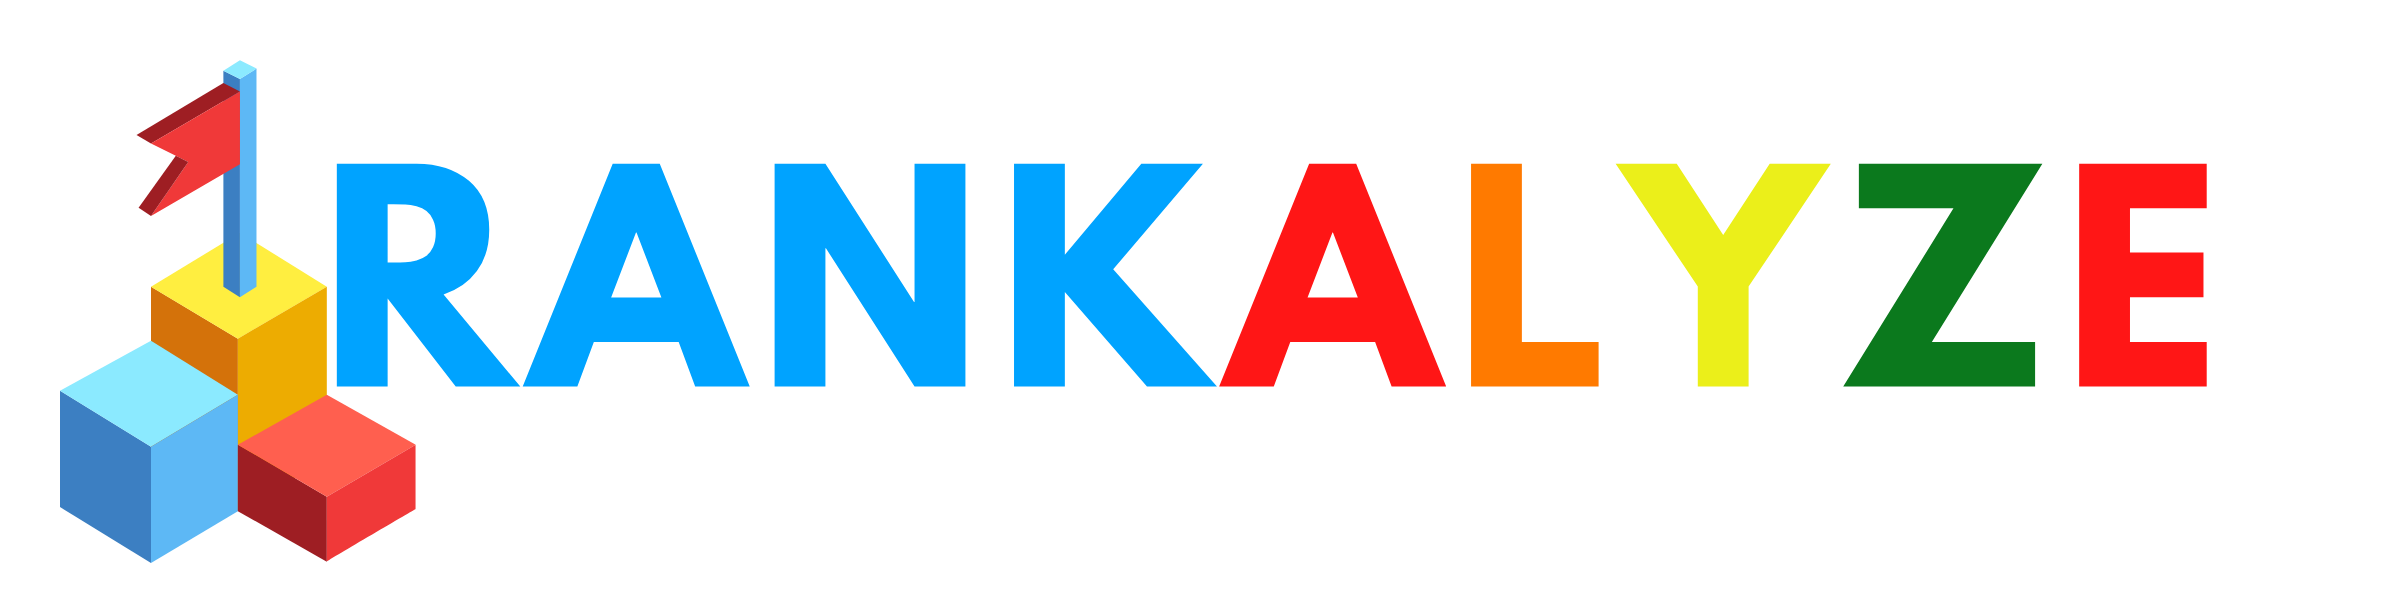 this image shows rankalyze logo